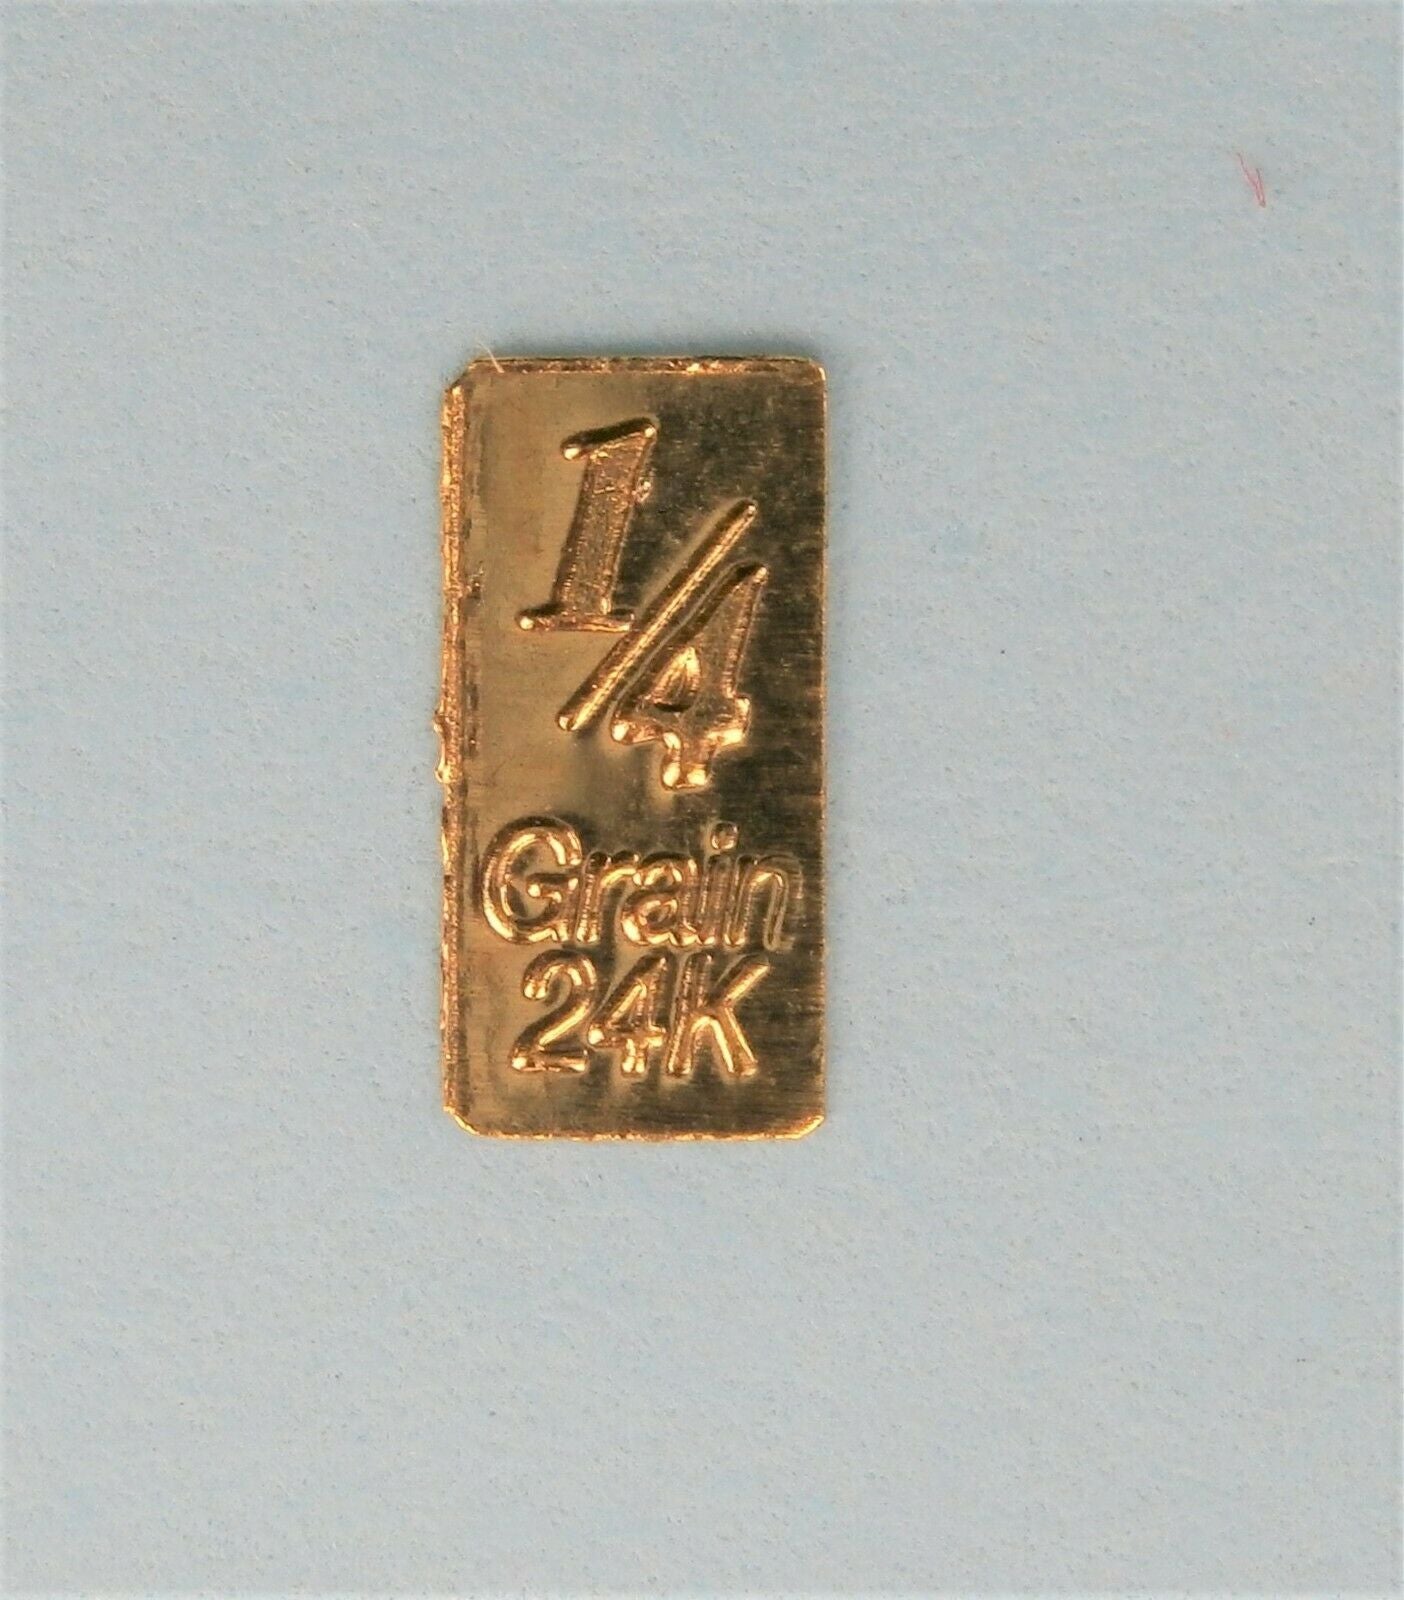 LOT 6 X 1/4 GRAIN .9999 FINE 24K GOLD BULLION BARS “HALF DOZEN ROSE WITH GOLD BARS” - IN COA CARD WHITE